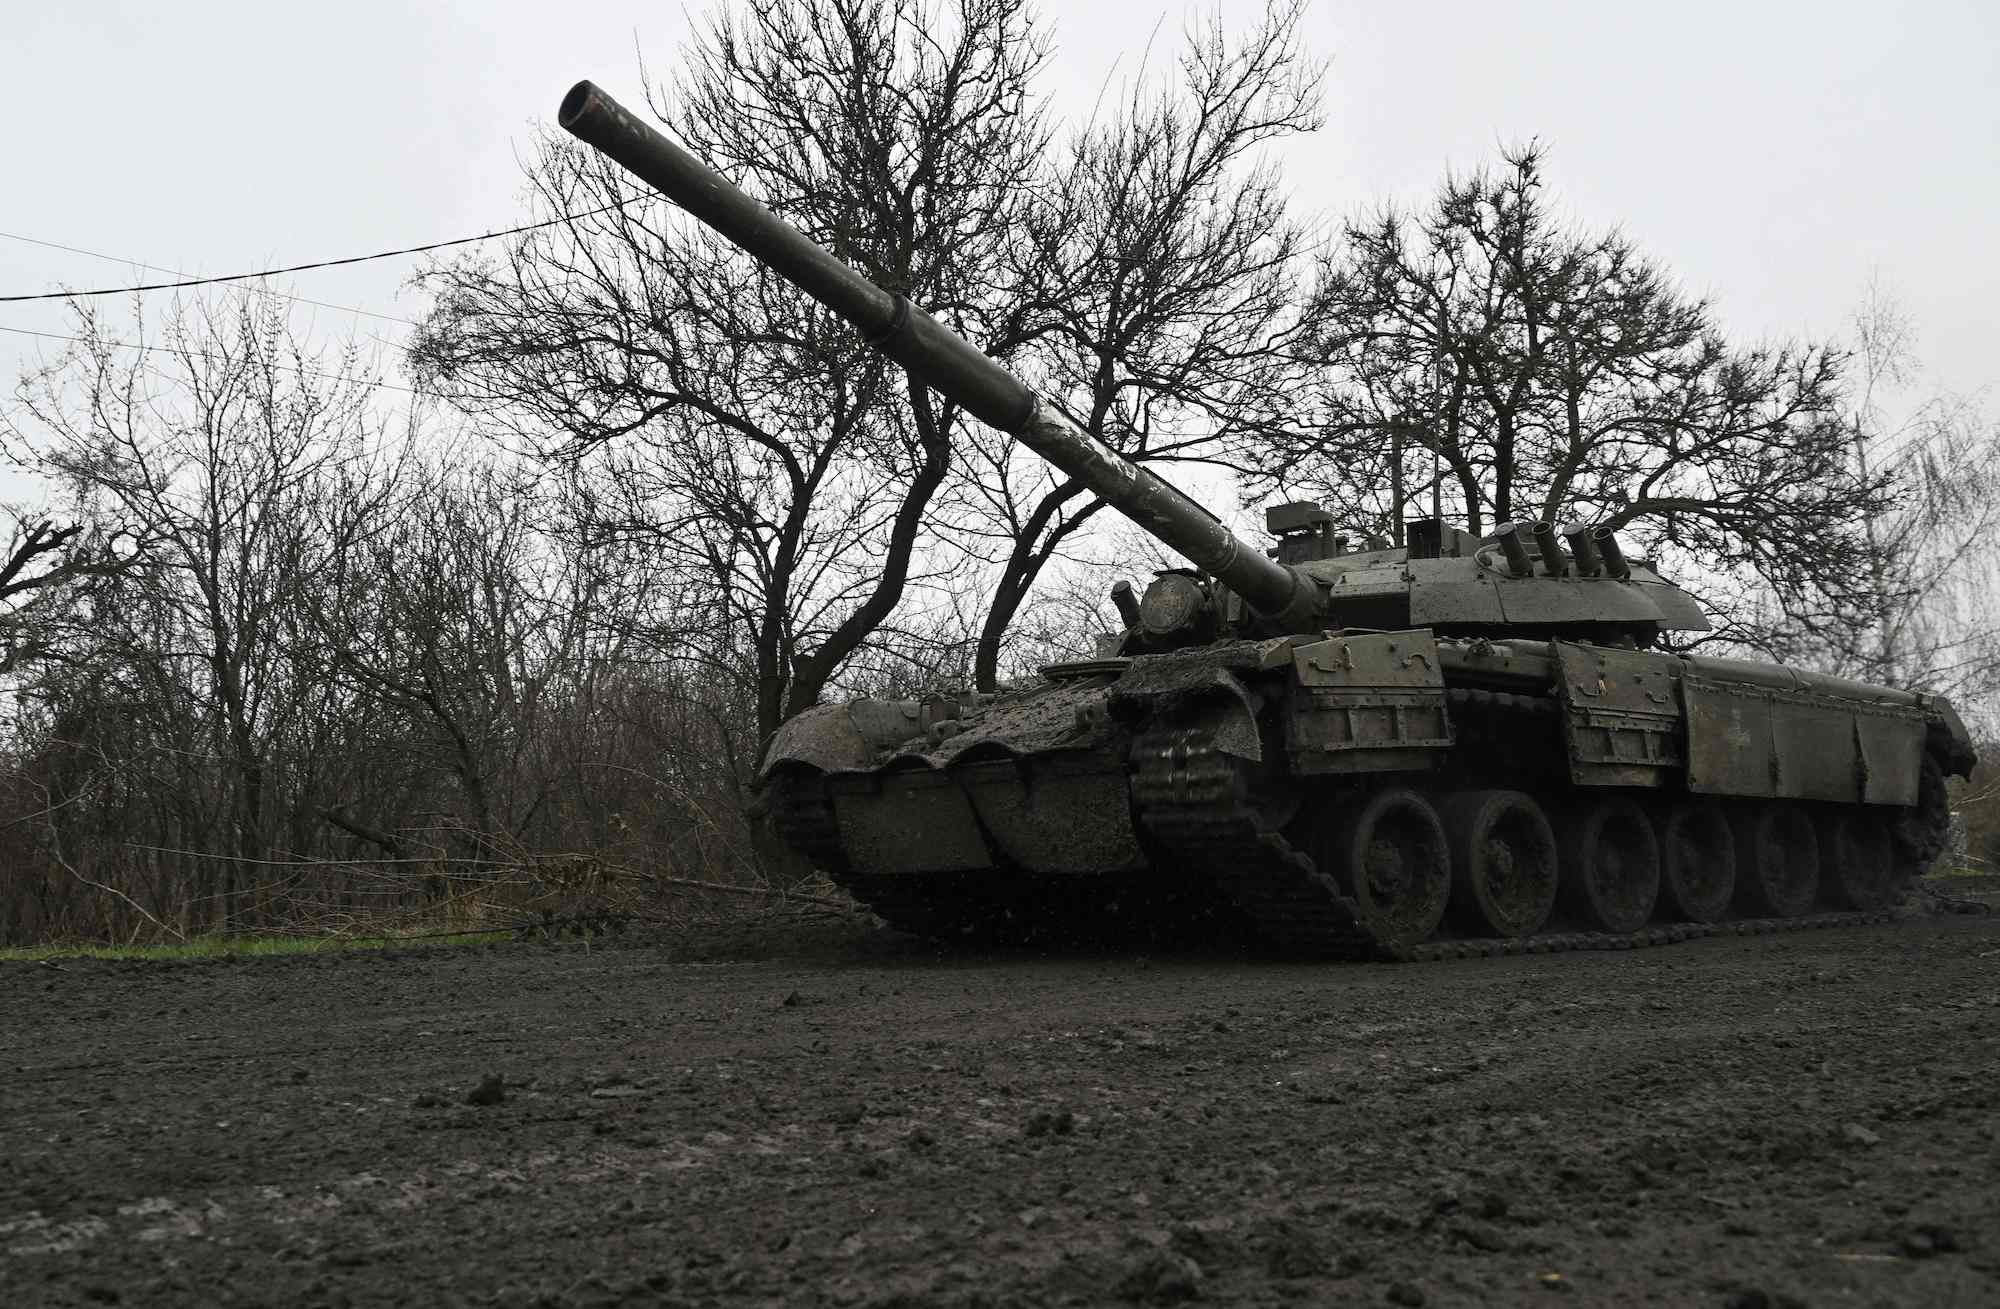 A Ukrainian tank rolls on a muddy road near Bakhmut on Wednesday.